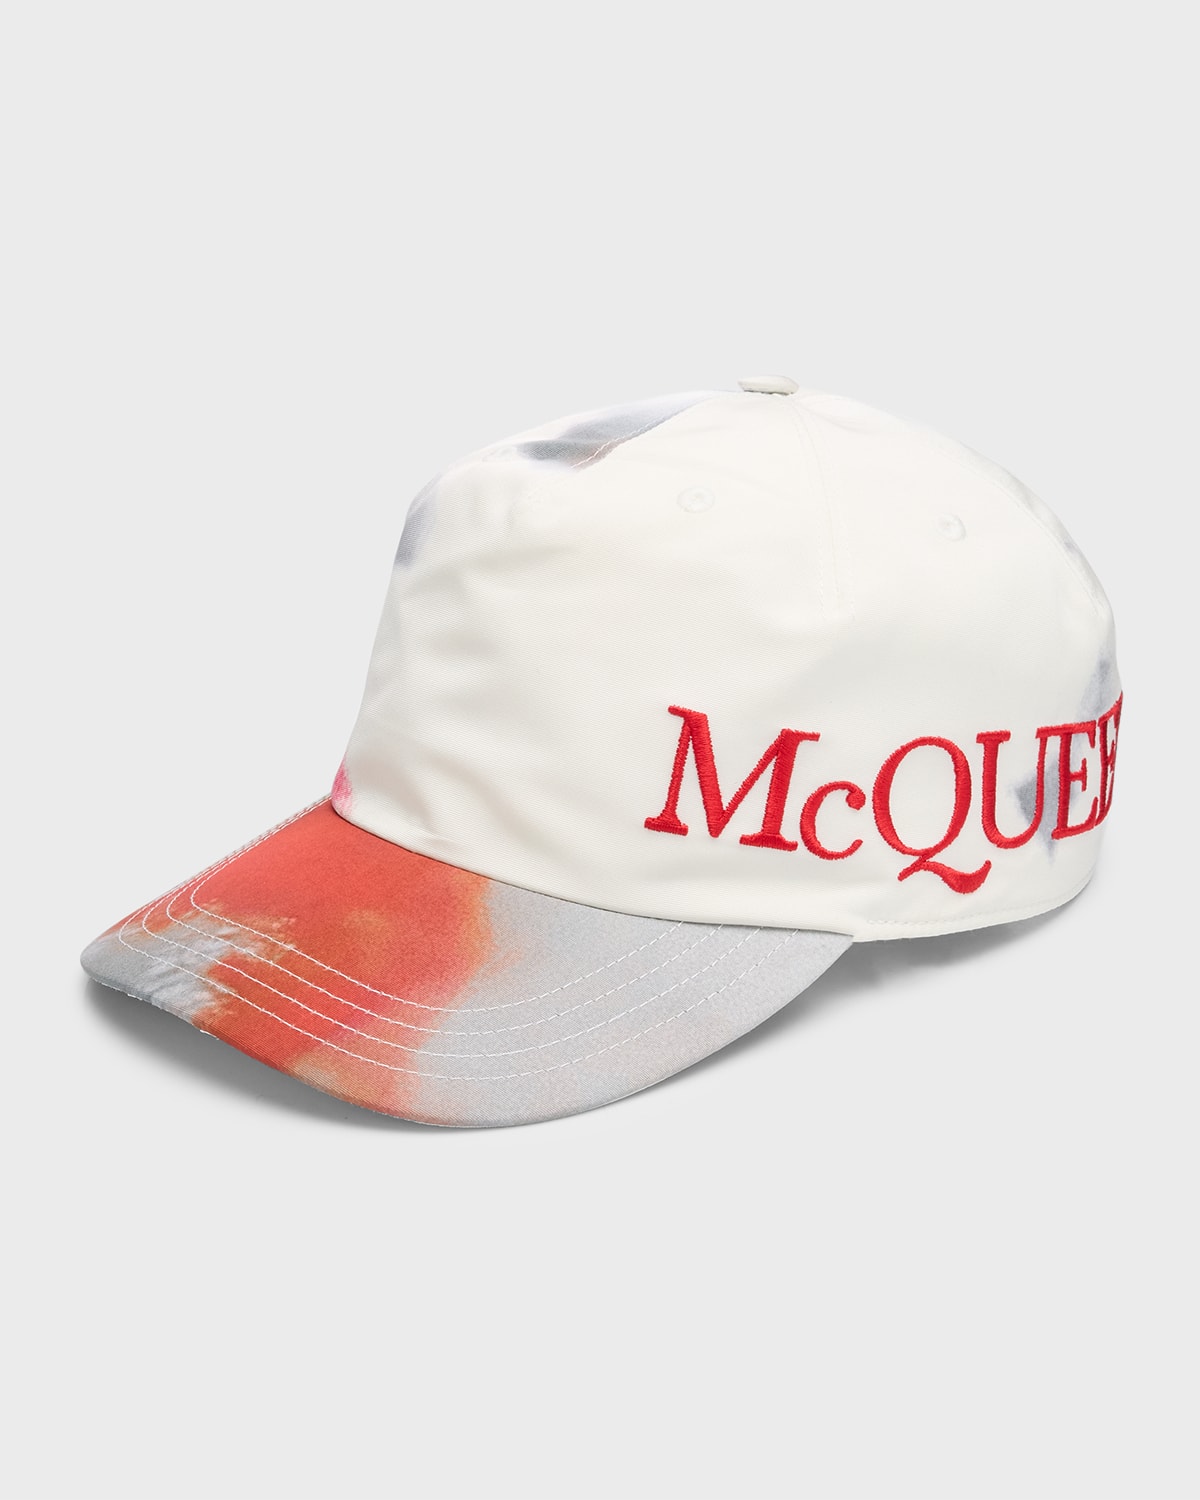 Alexander Mcqueen Men's Obscured Flower Logo Baseball Cap In White And Red